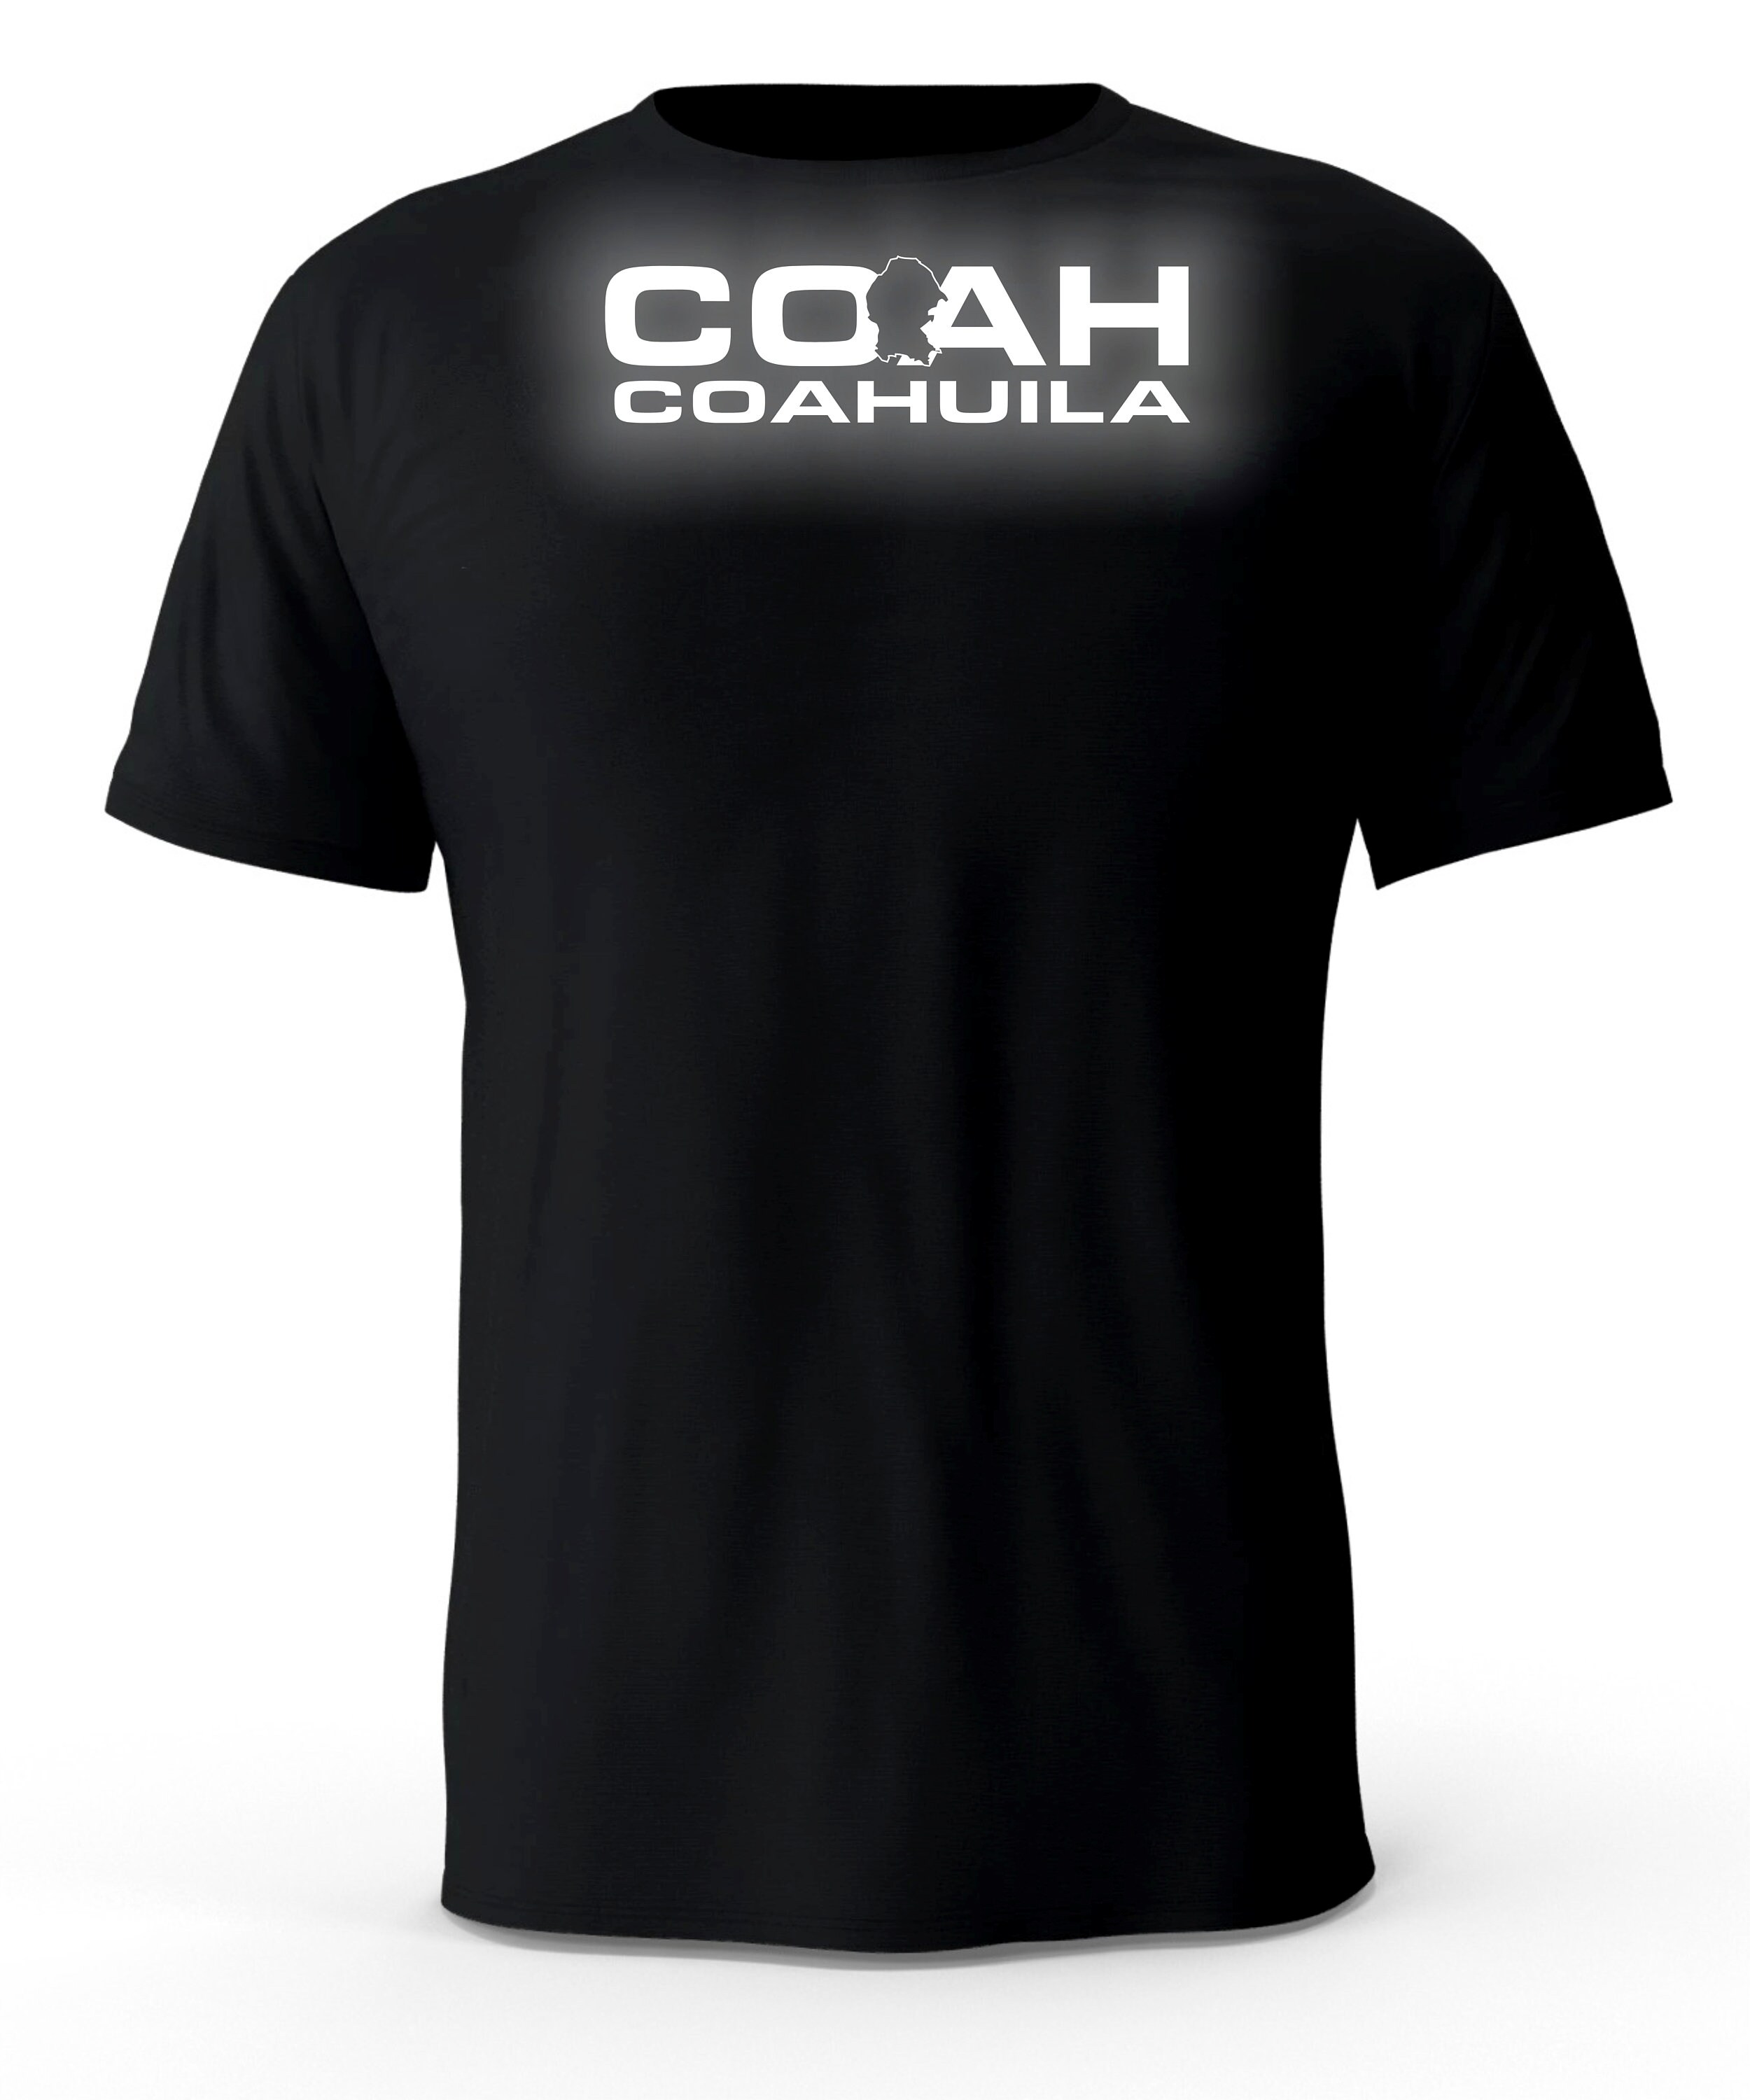 COAH ShirtCoahuila Mexico T-ShirtCOAH Decal ShirtHeavy Cotton T-shirtUnisex ShirtHunting Tee